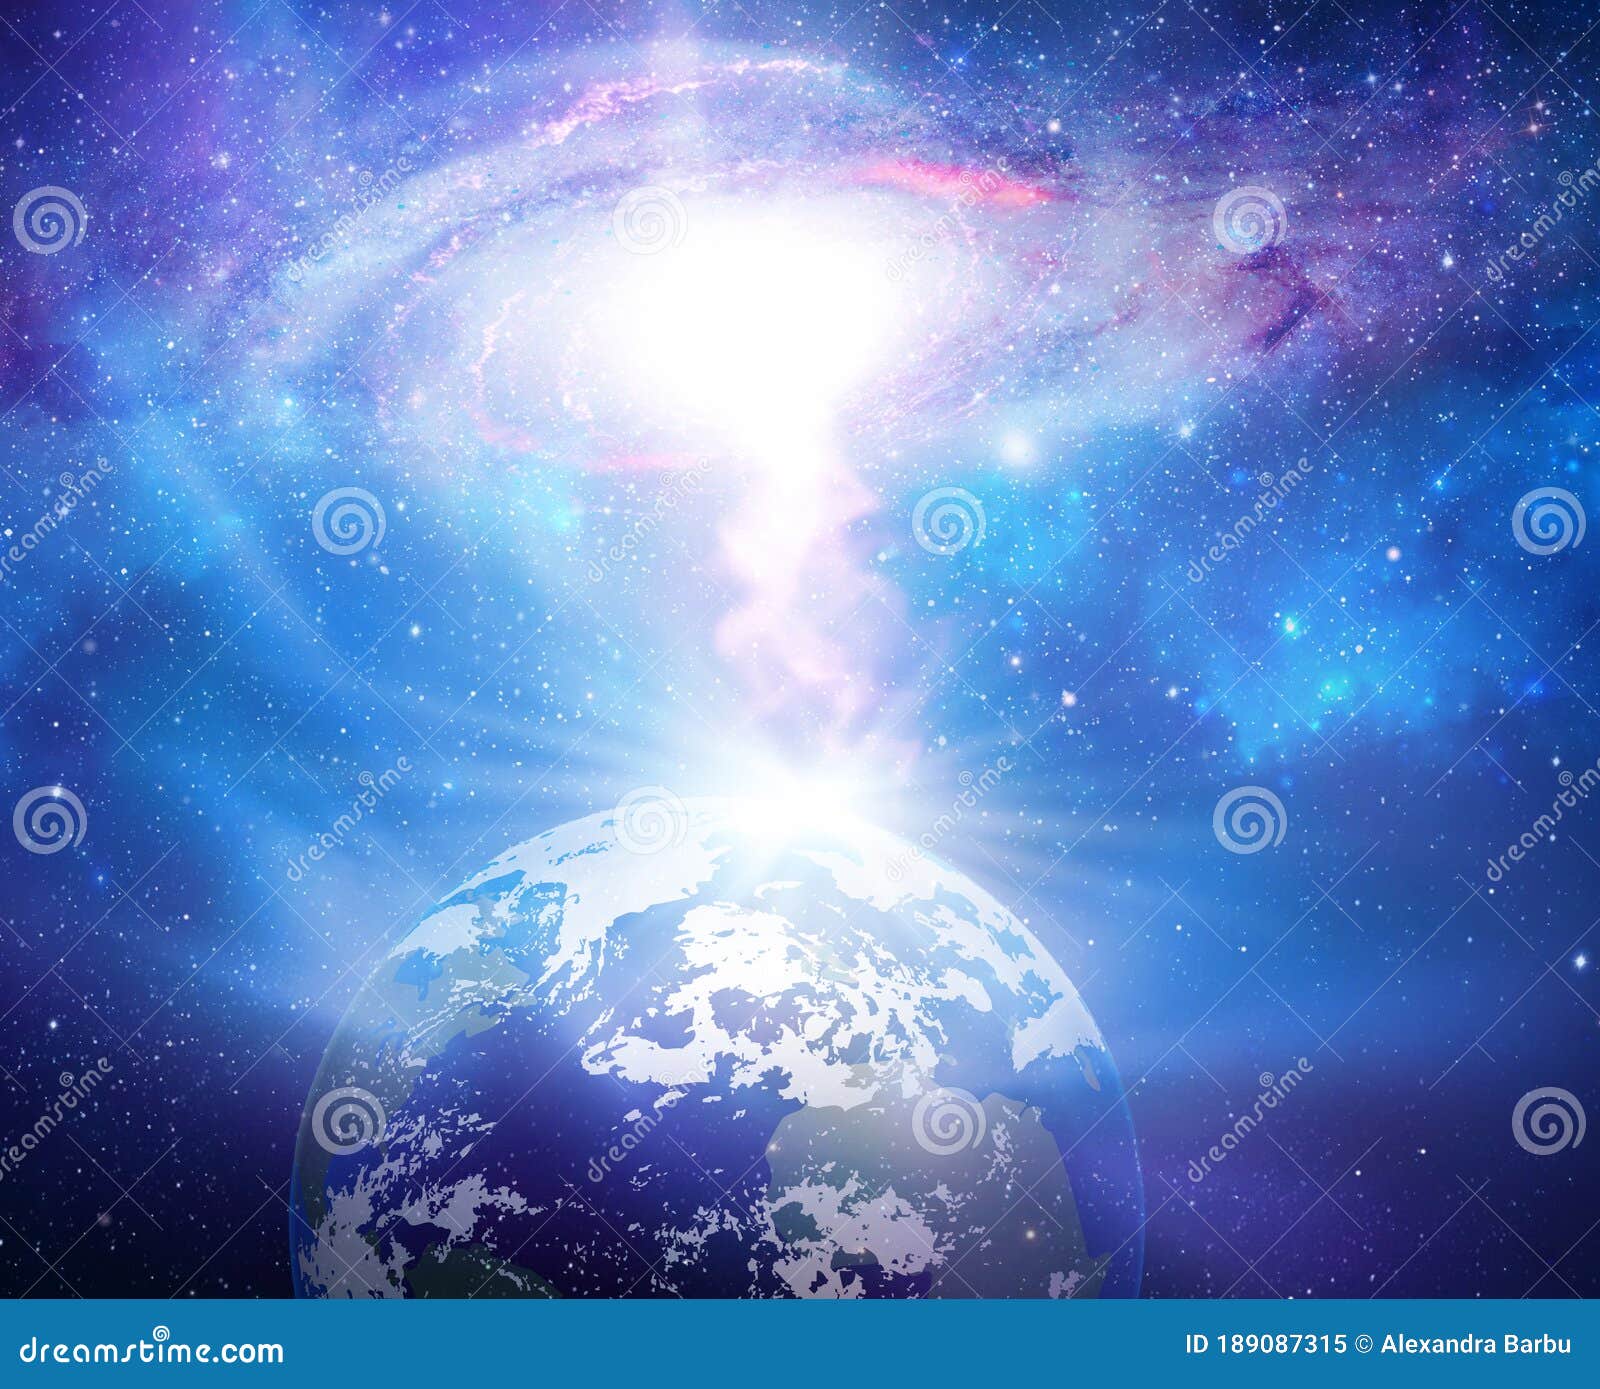 spiritual love healing earth energy, power, portal, evolution, transformation